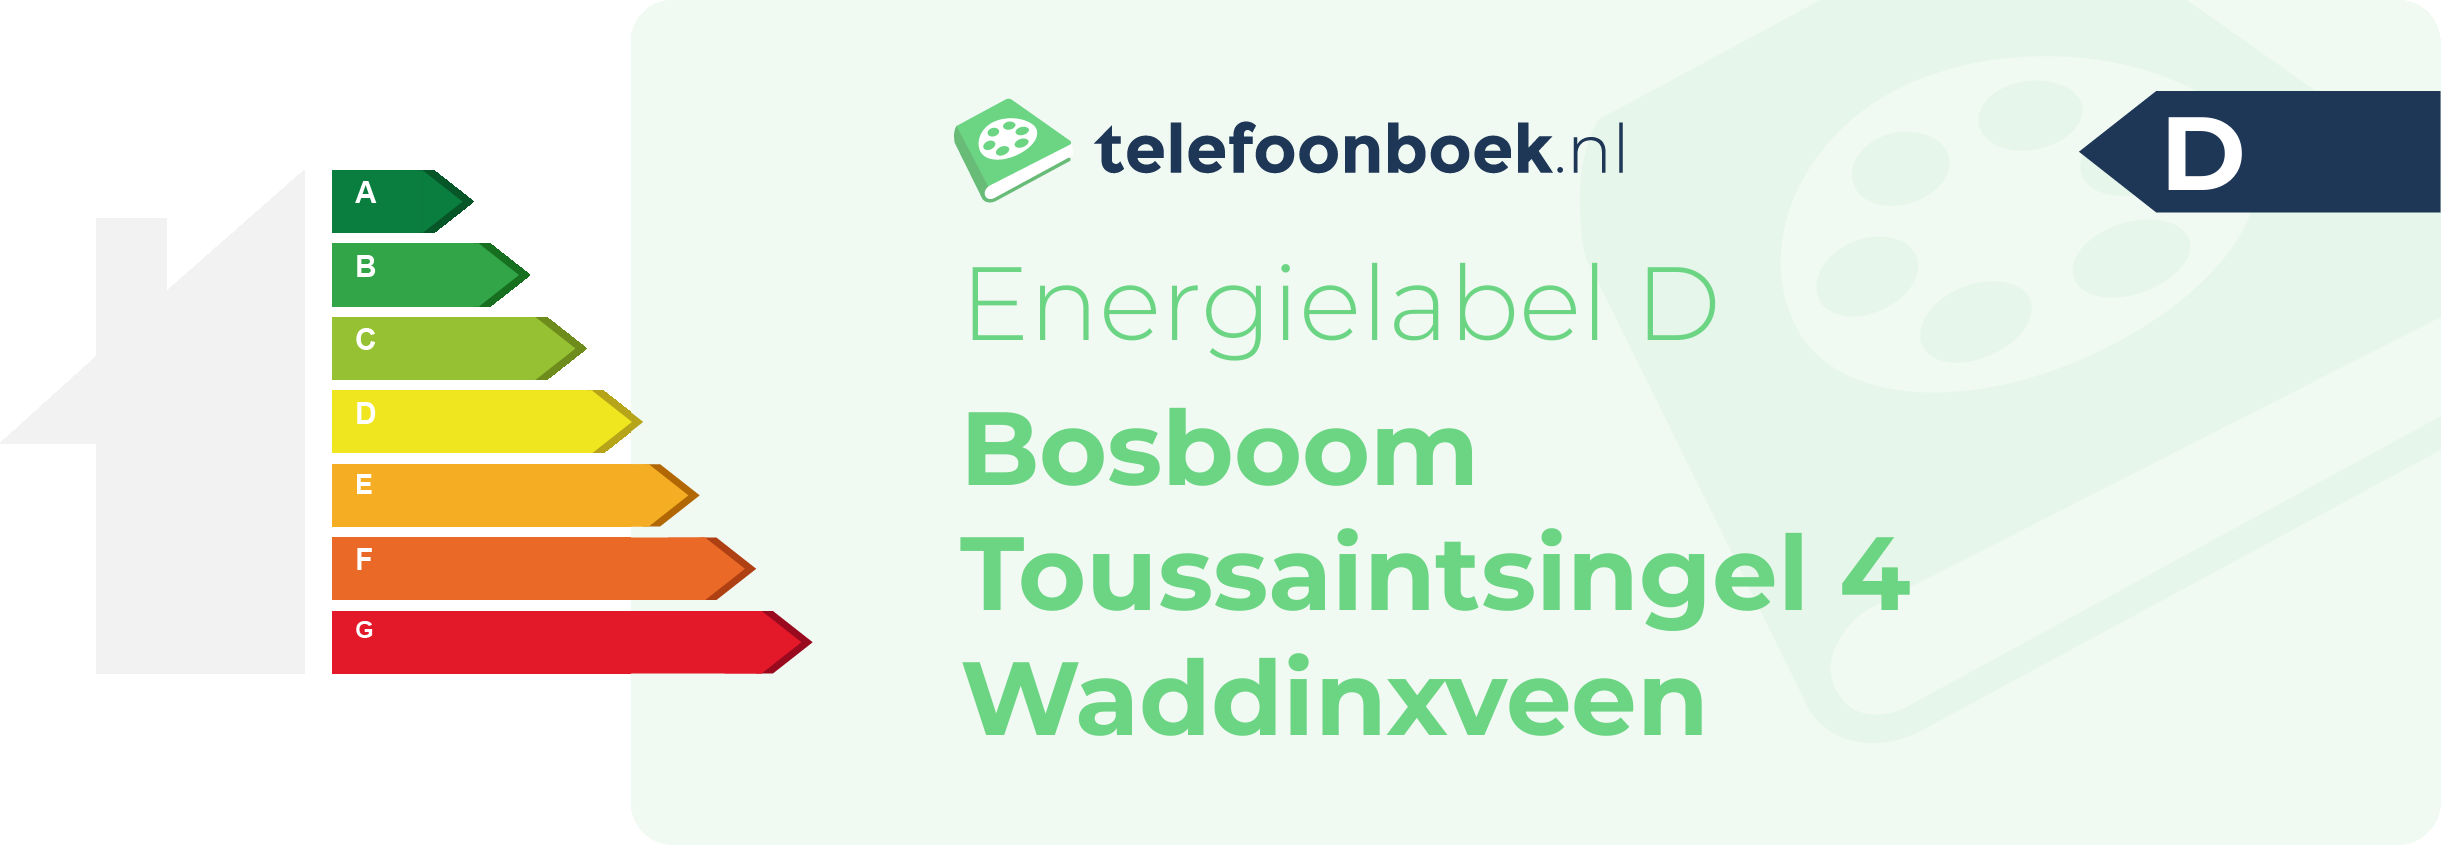 Energielabel Bosboom Toussaintsingel 4 Waddinxveen